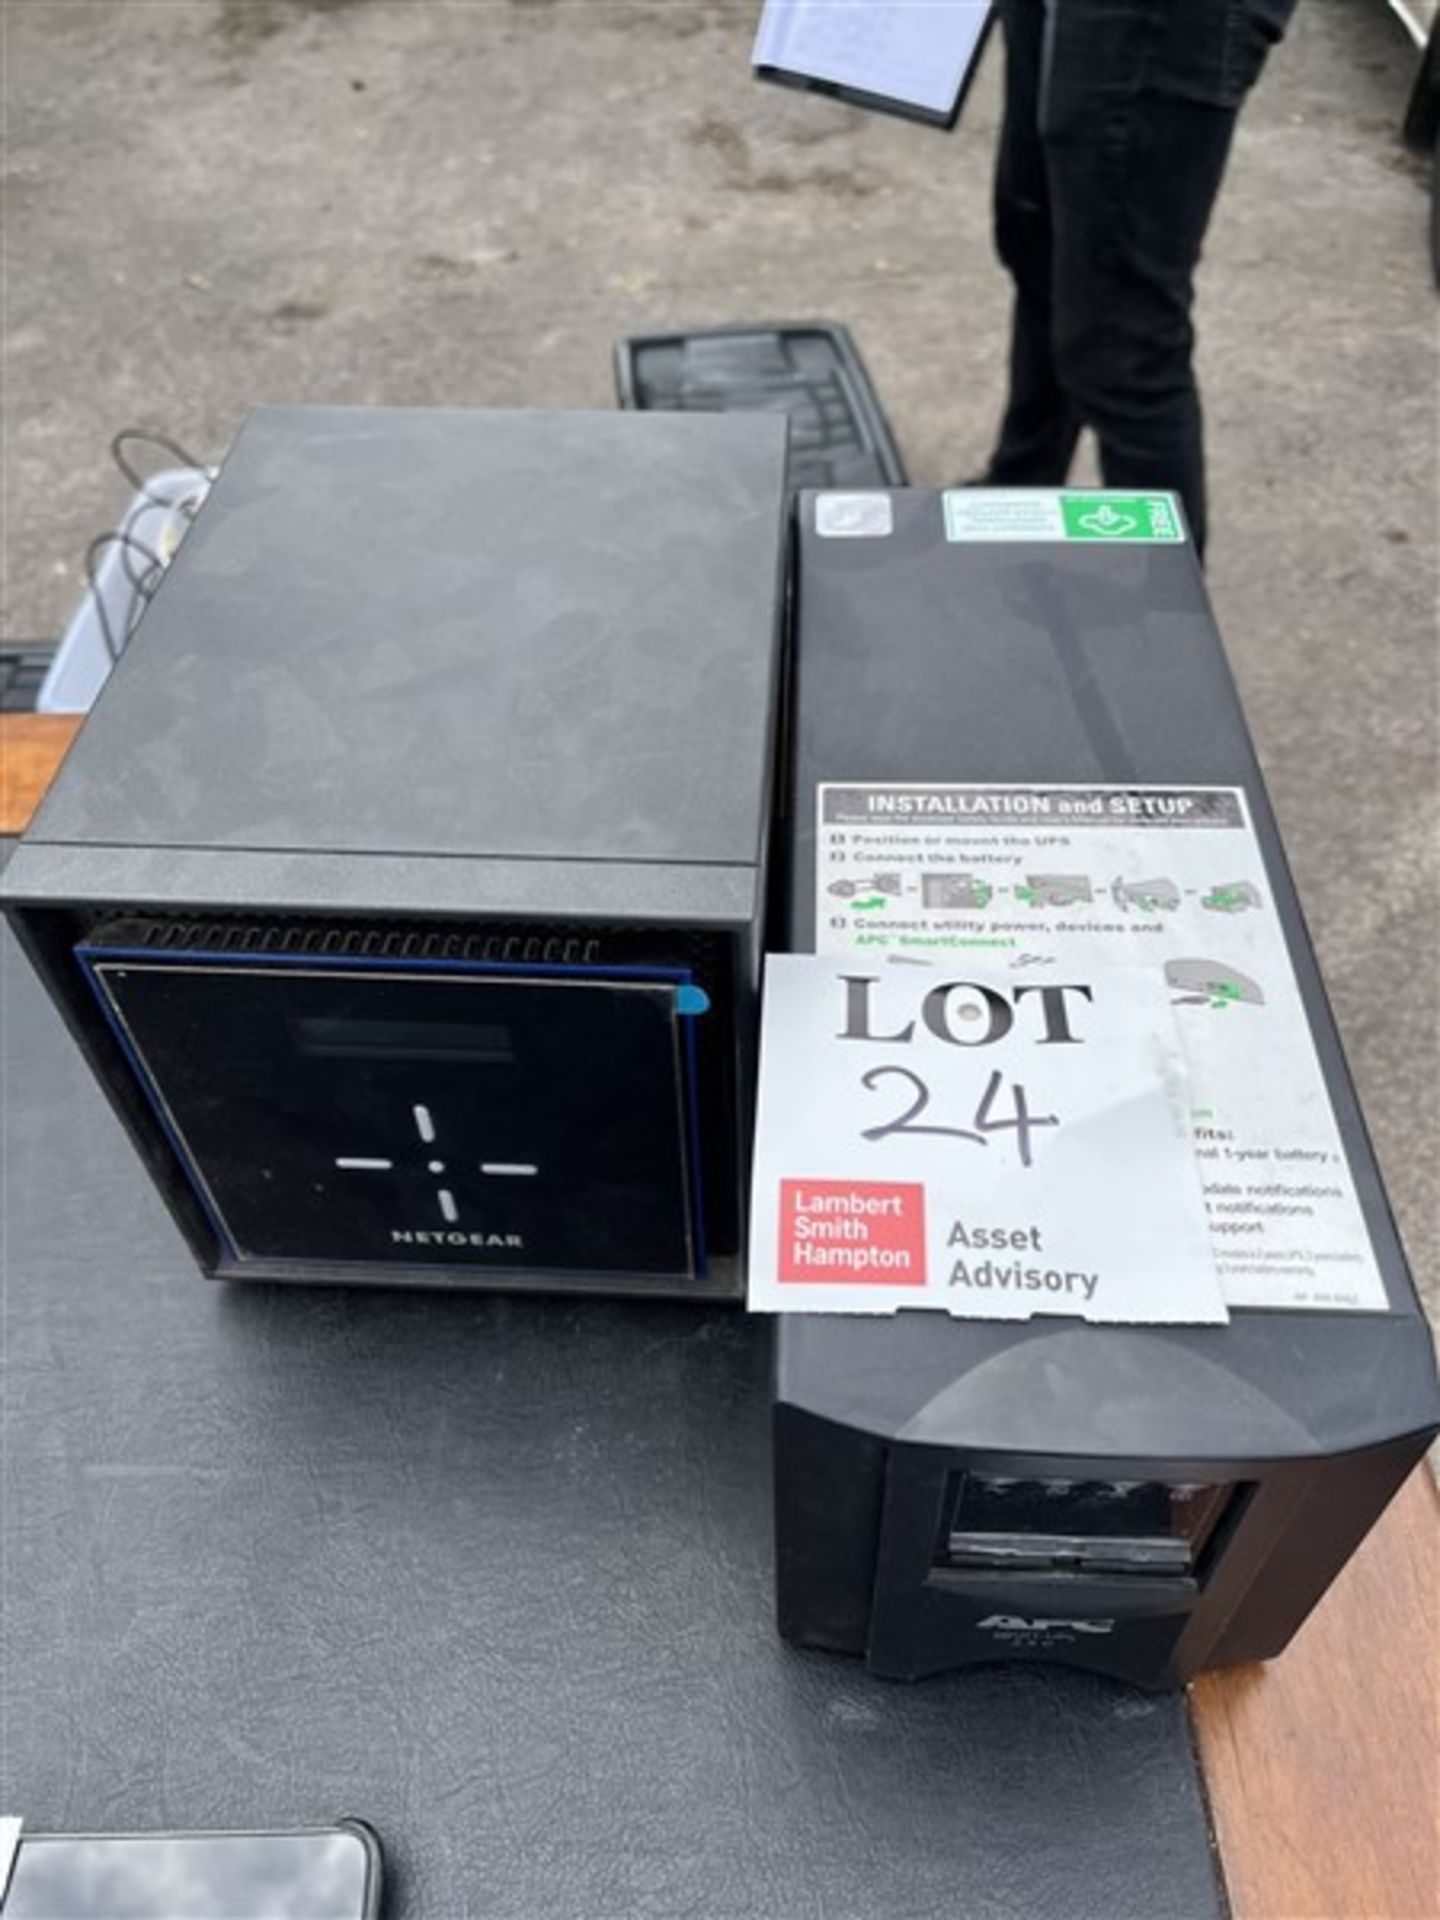 APC smart UPS 750 and Netgear storage unit